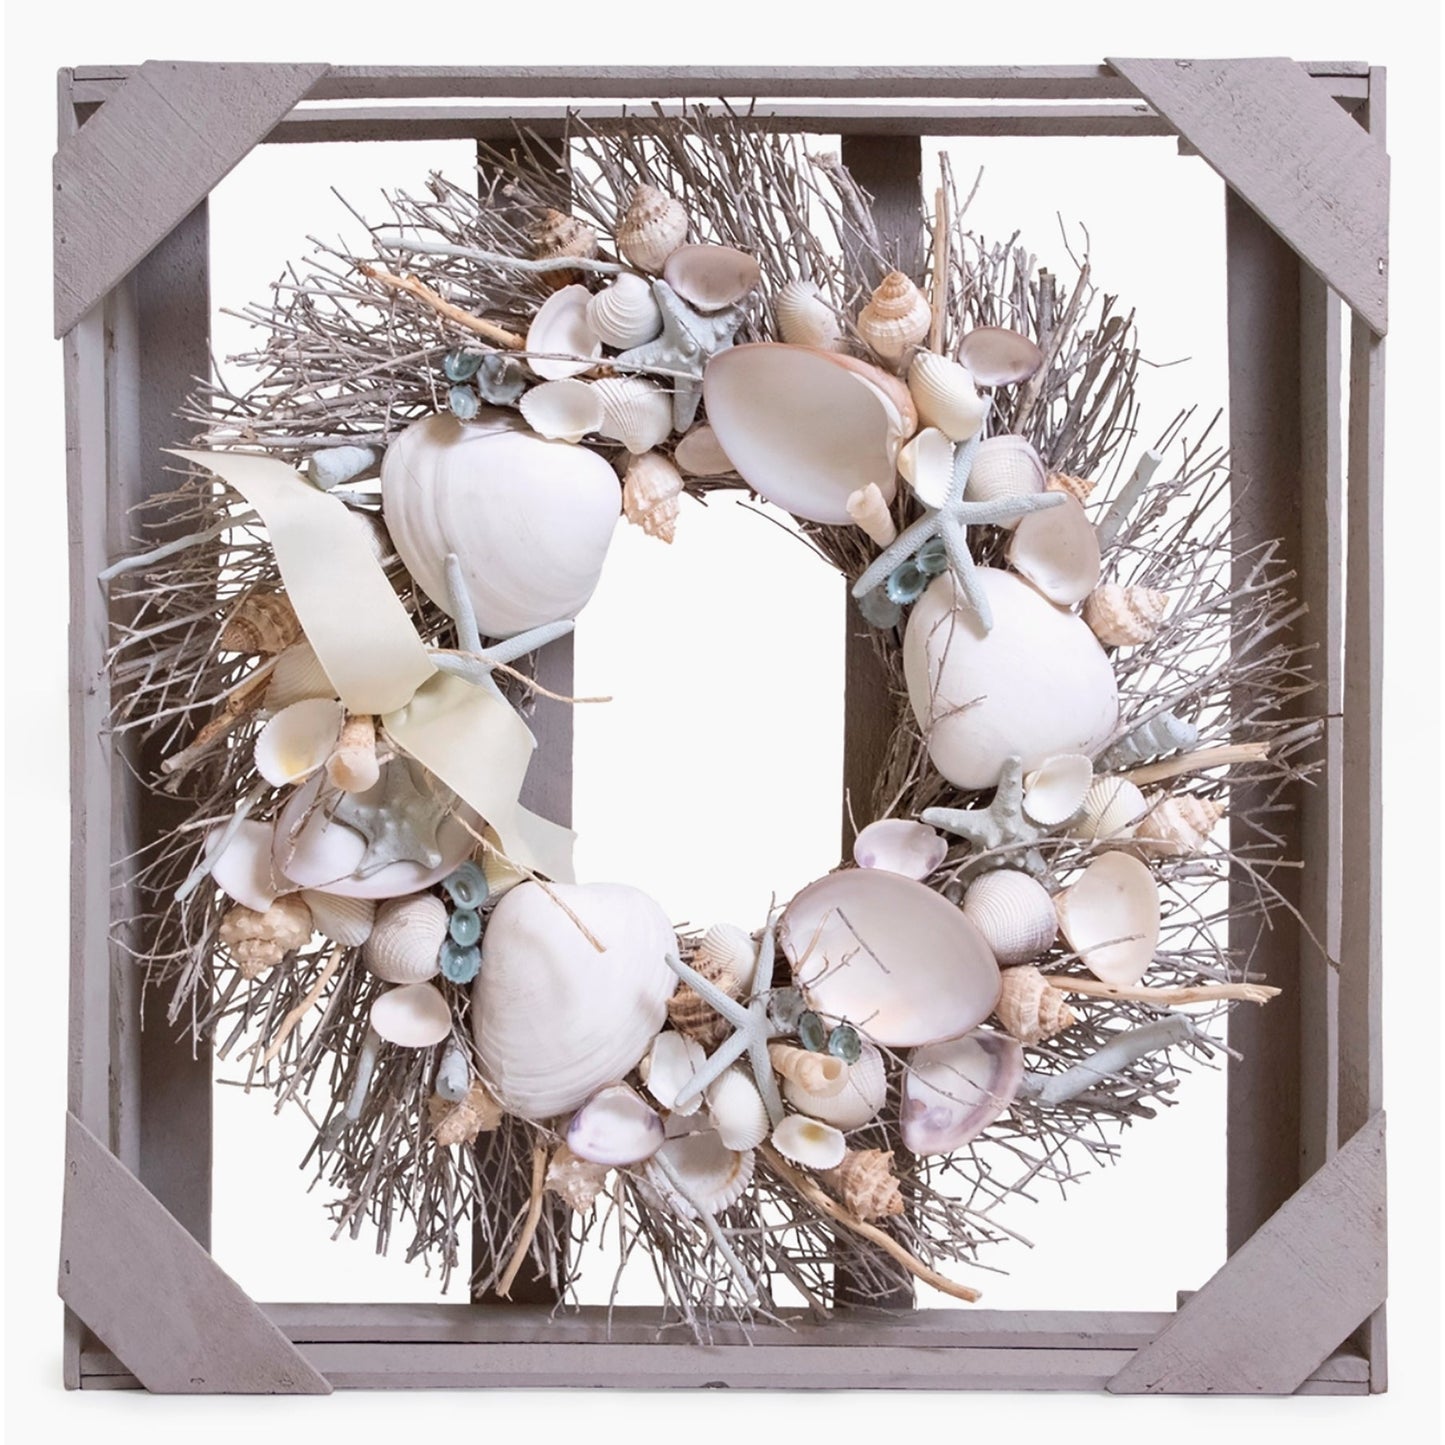 19" White & Light Blue Seashell Wreath by Andaluca Home